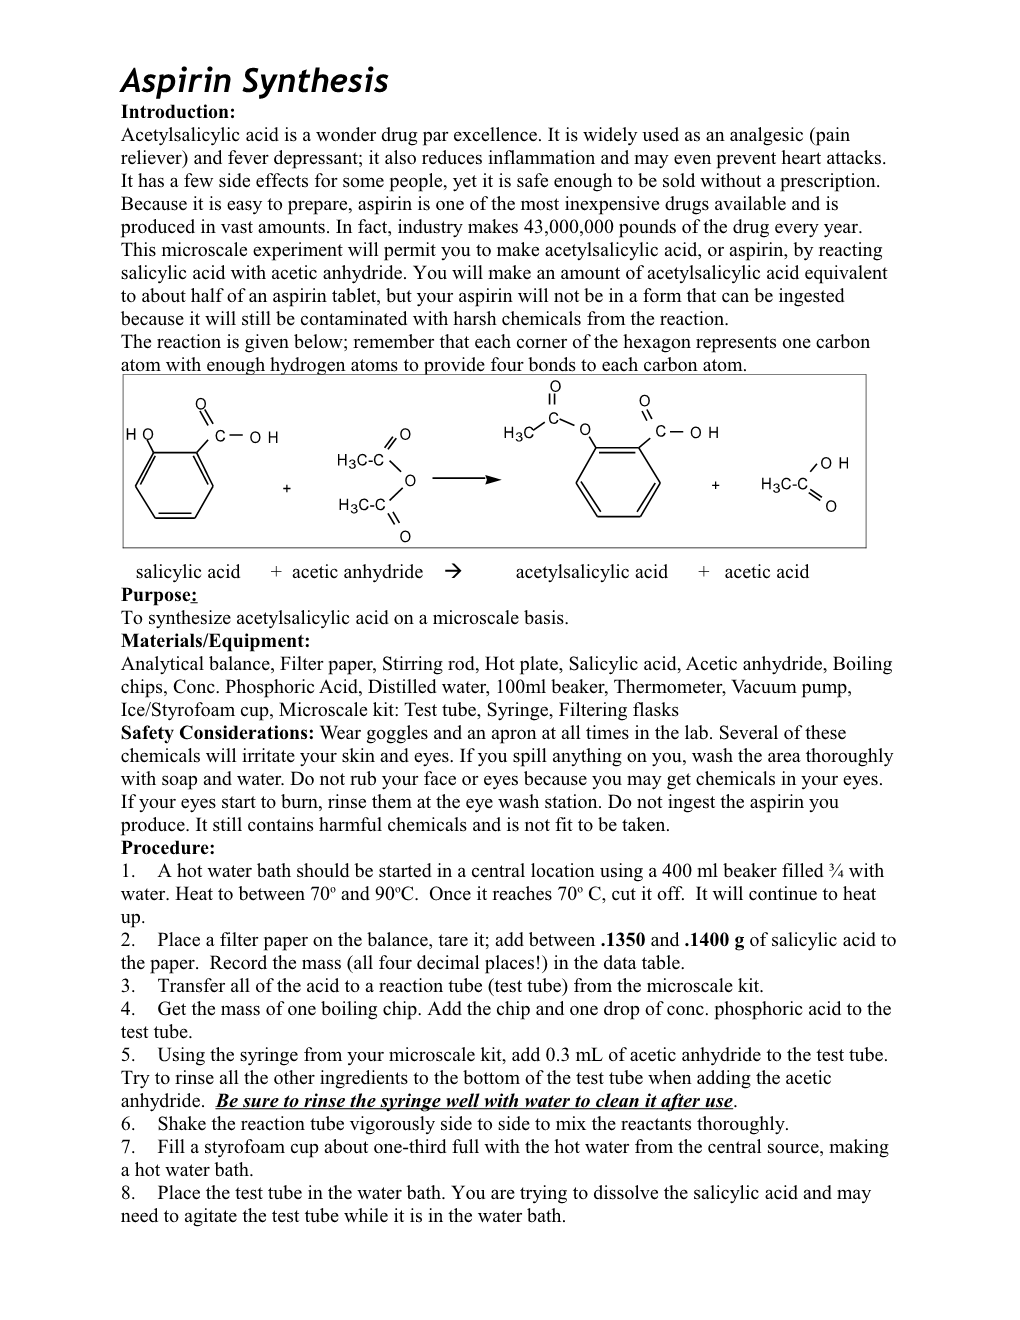 Synthesis of Acetylsalicylic Acid